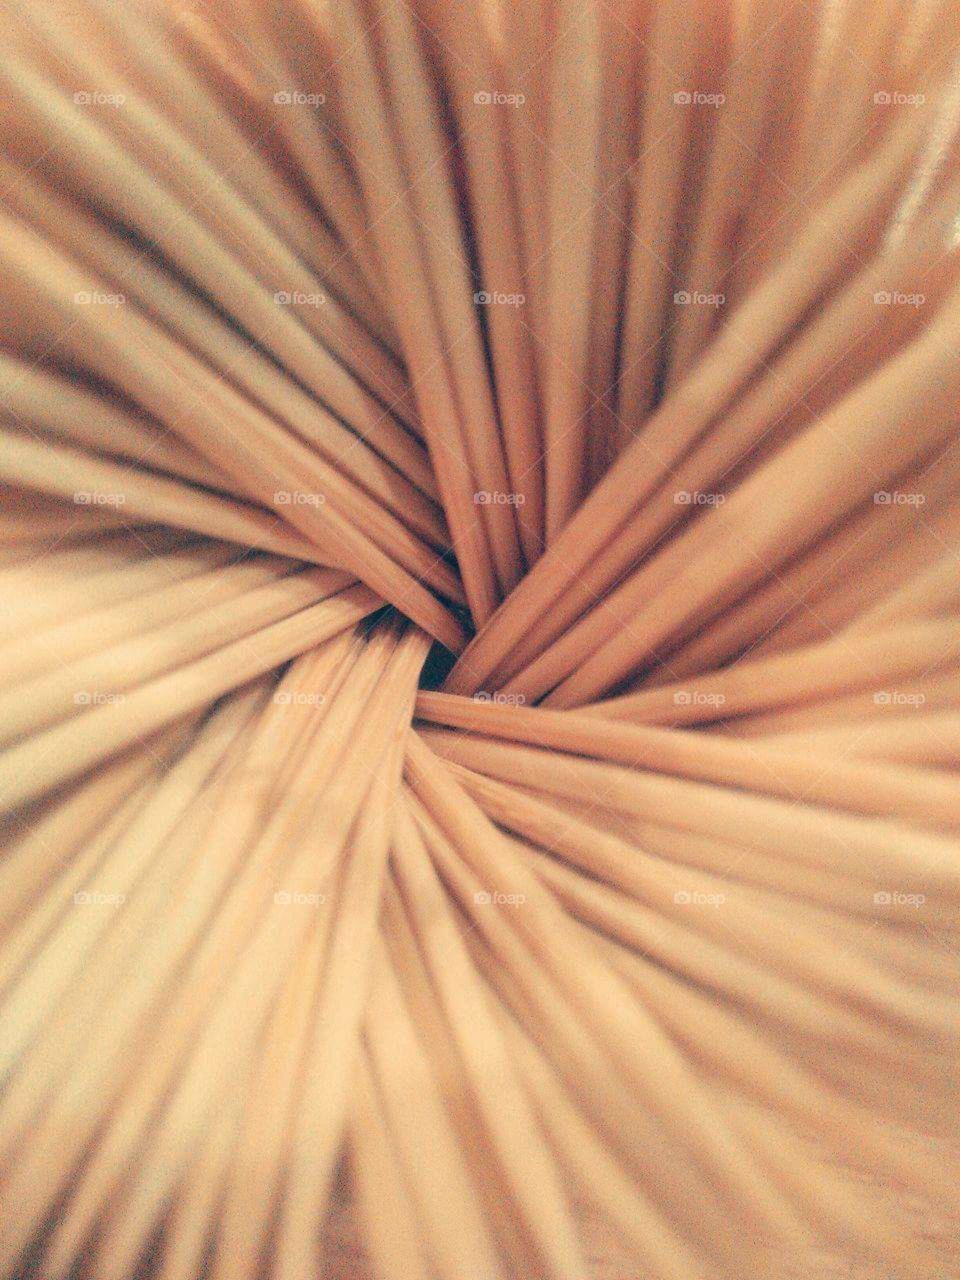 Toothpick vortex